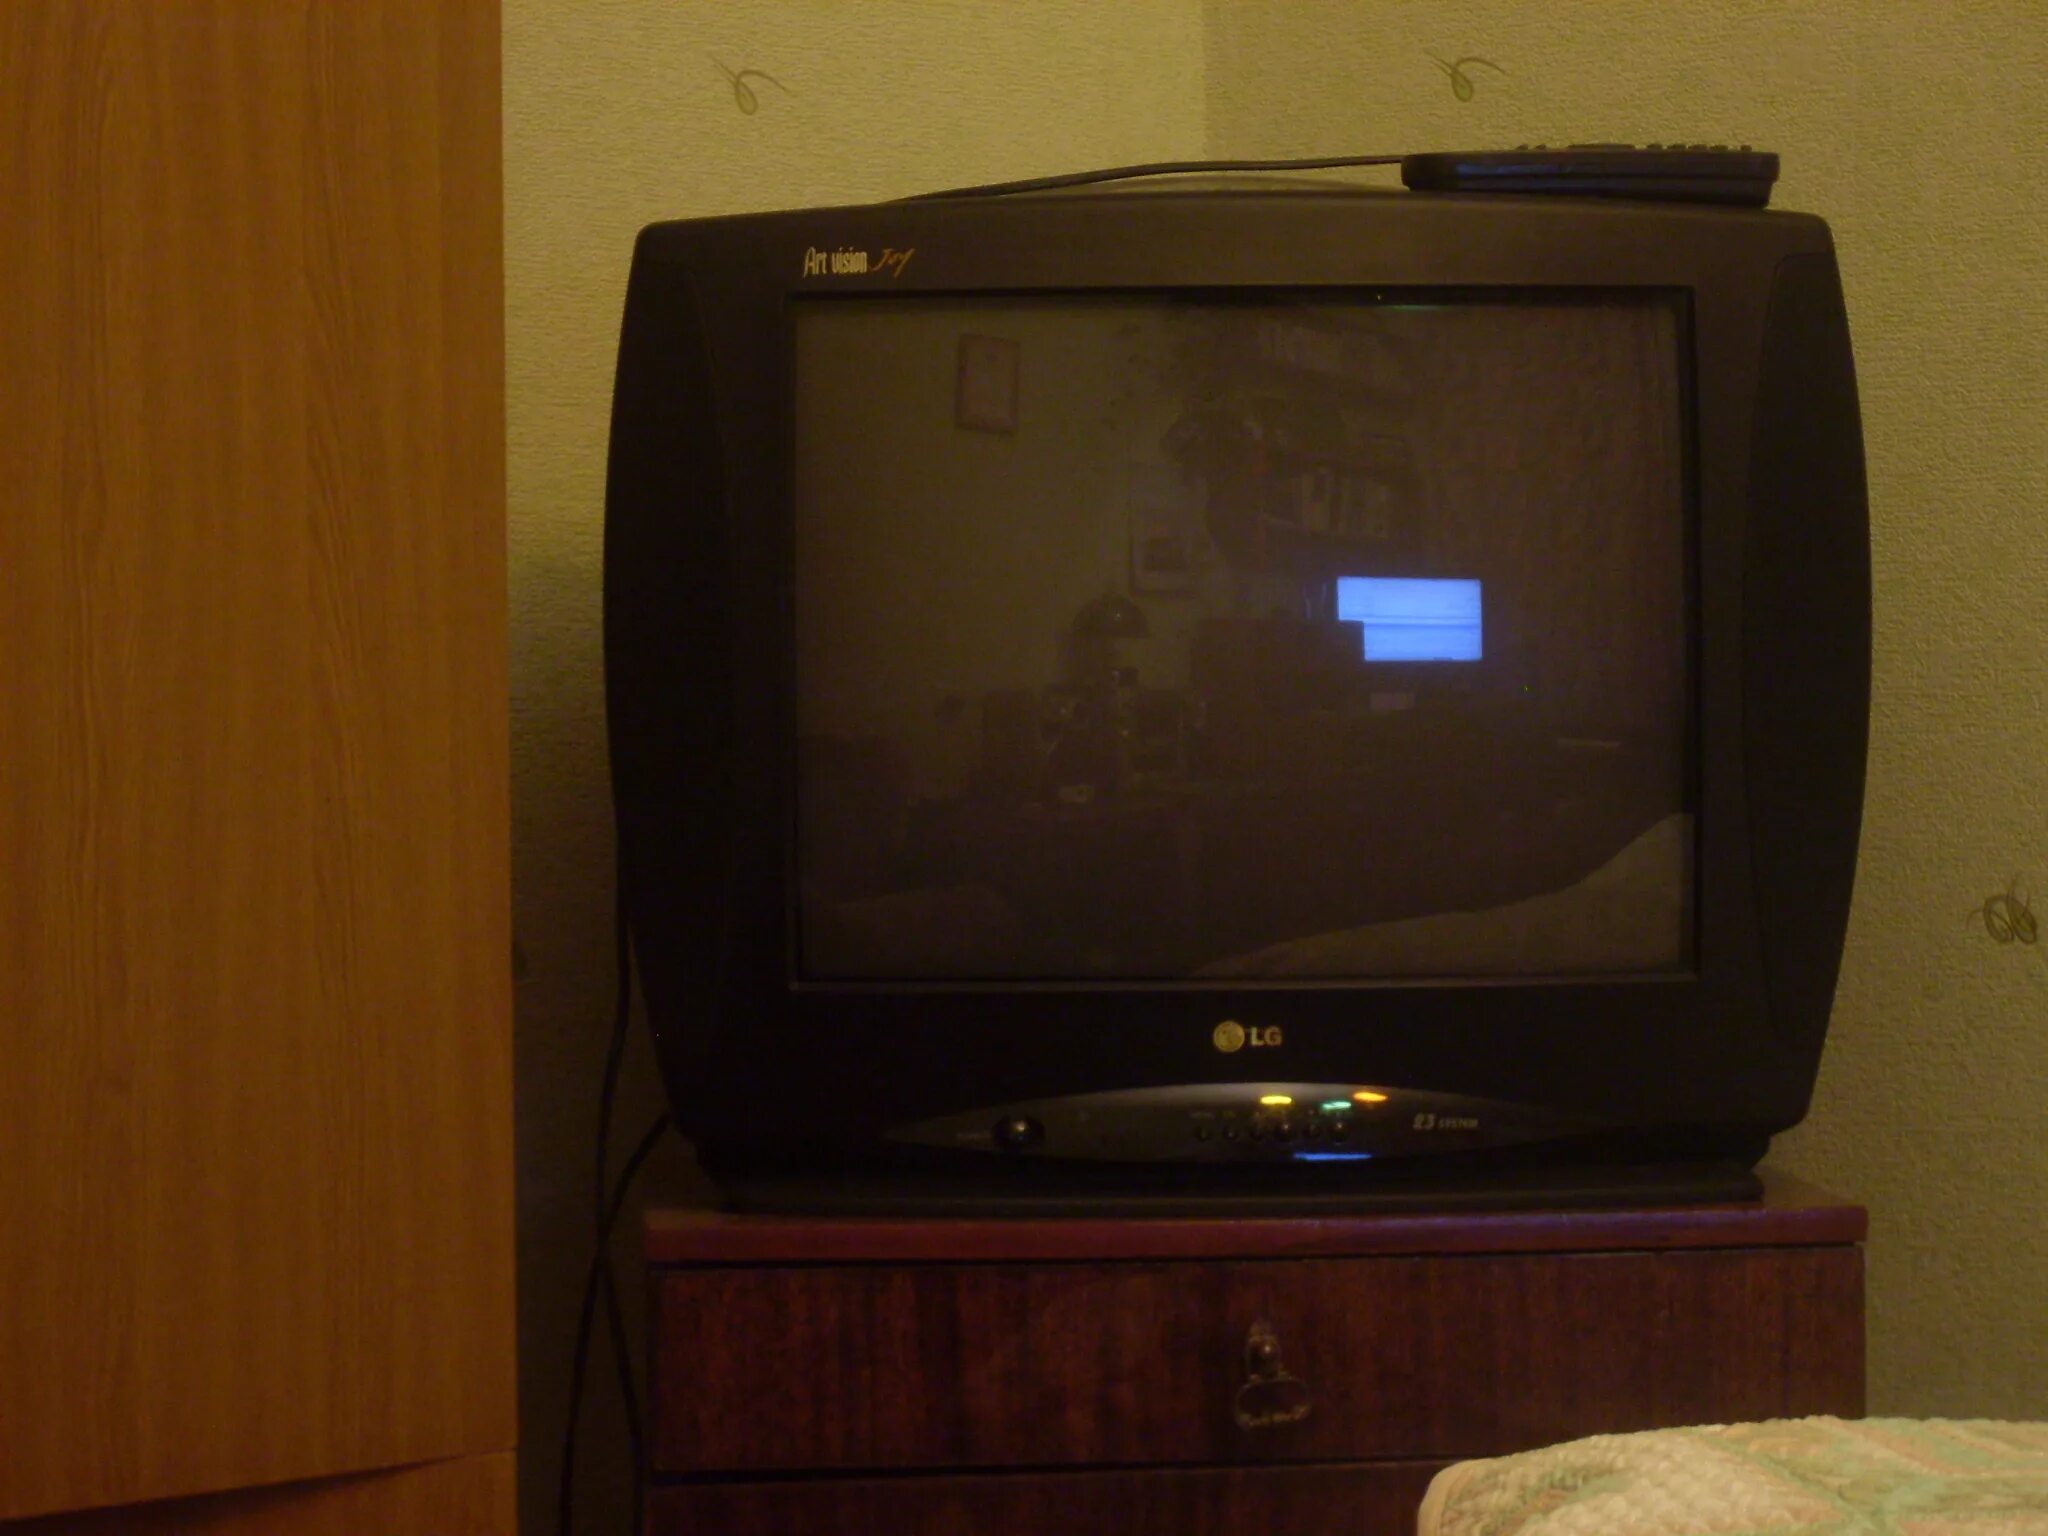 Телевизор lg старые модели. Телевизор Лджи 23 System. Кинескопный телевизор LG 23 System. Телевизор LG av stereo 23 System. Телевизор LG старый кинескопный 23 System.